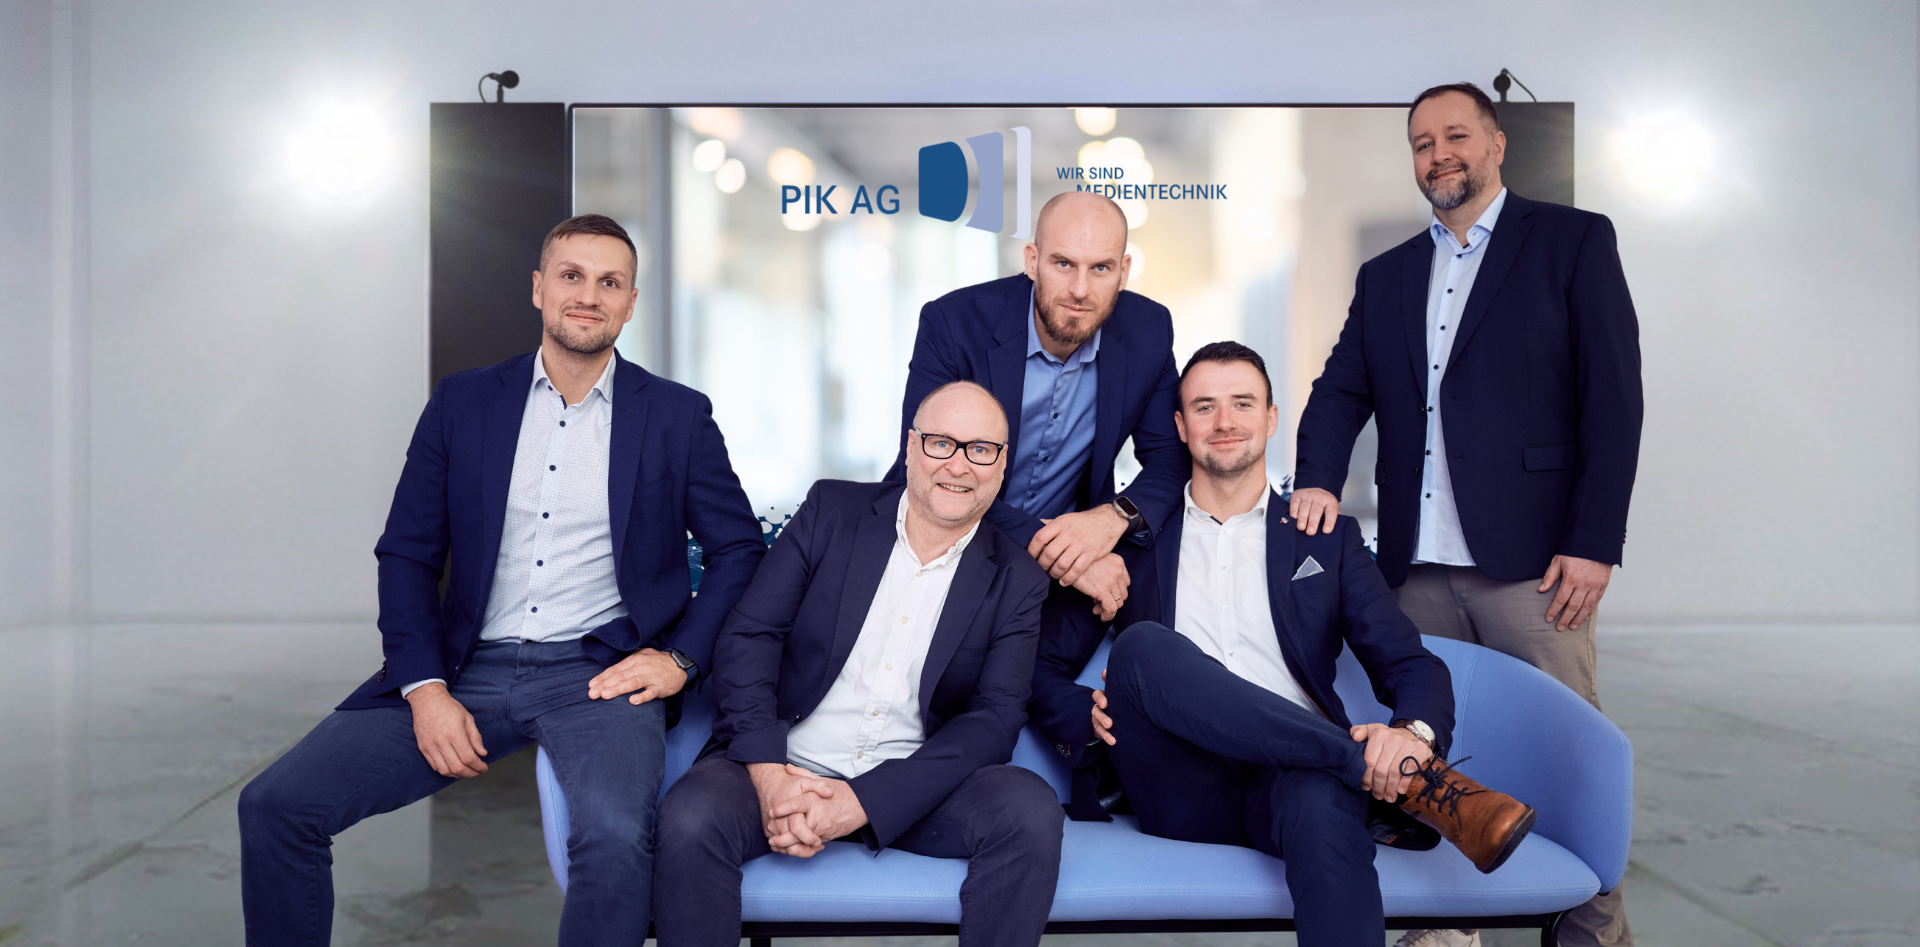 PIK AG - Das Unternehmen